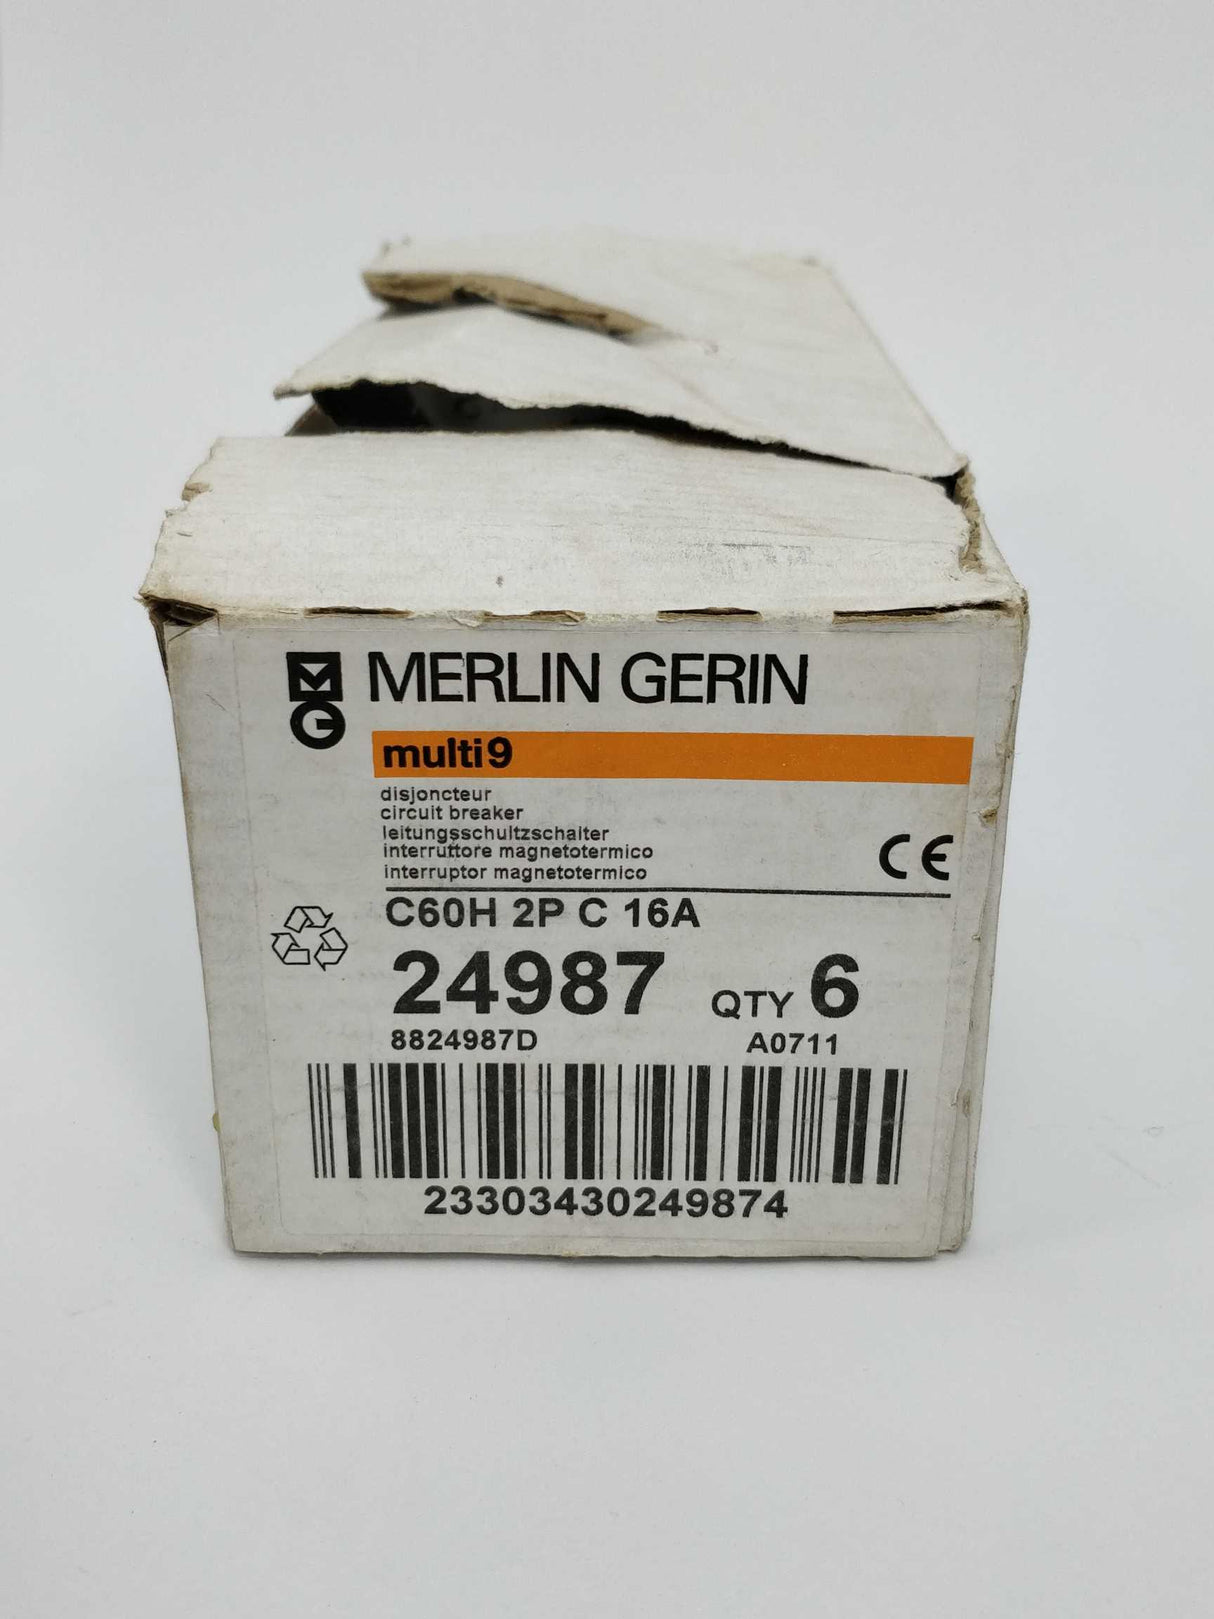 Merlin Gerin C60H 2P C 16A multi9 24987 circuit breaker